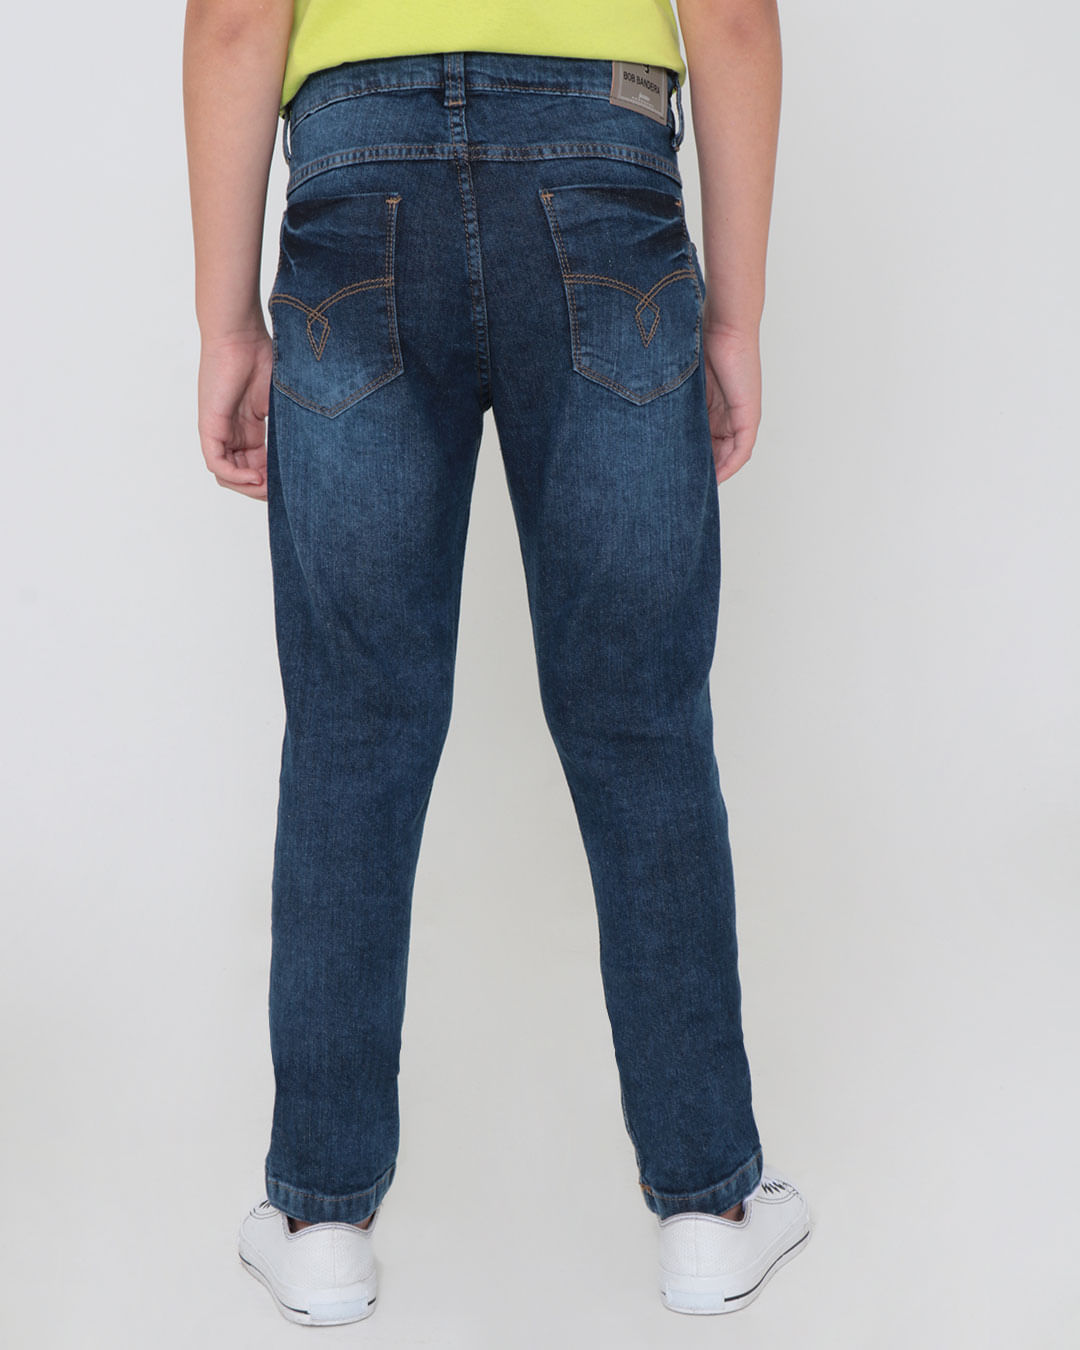 Calca-Jeans-12710-Masc-1016-Lm---Blue-Jeans-Medio